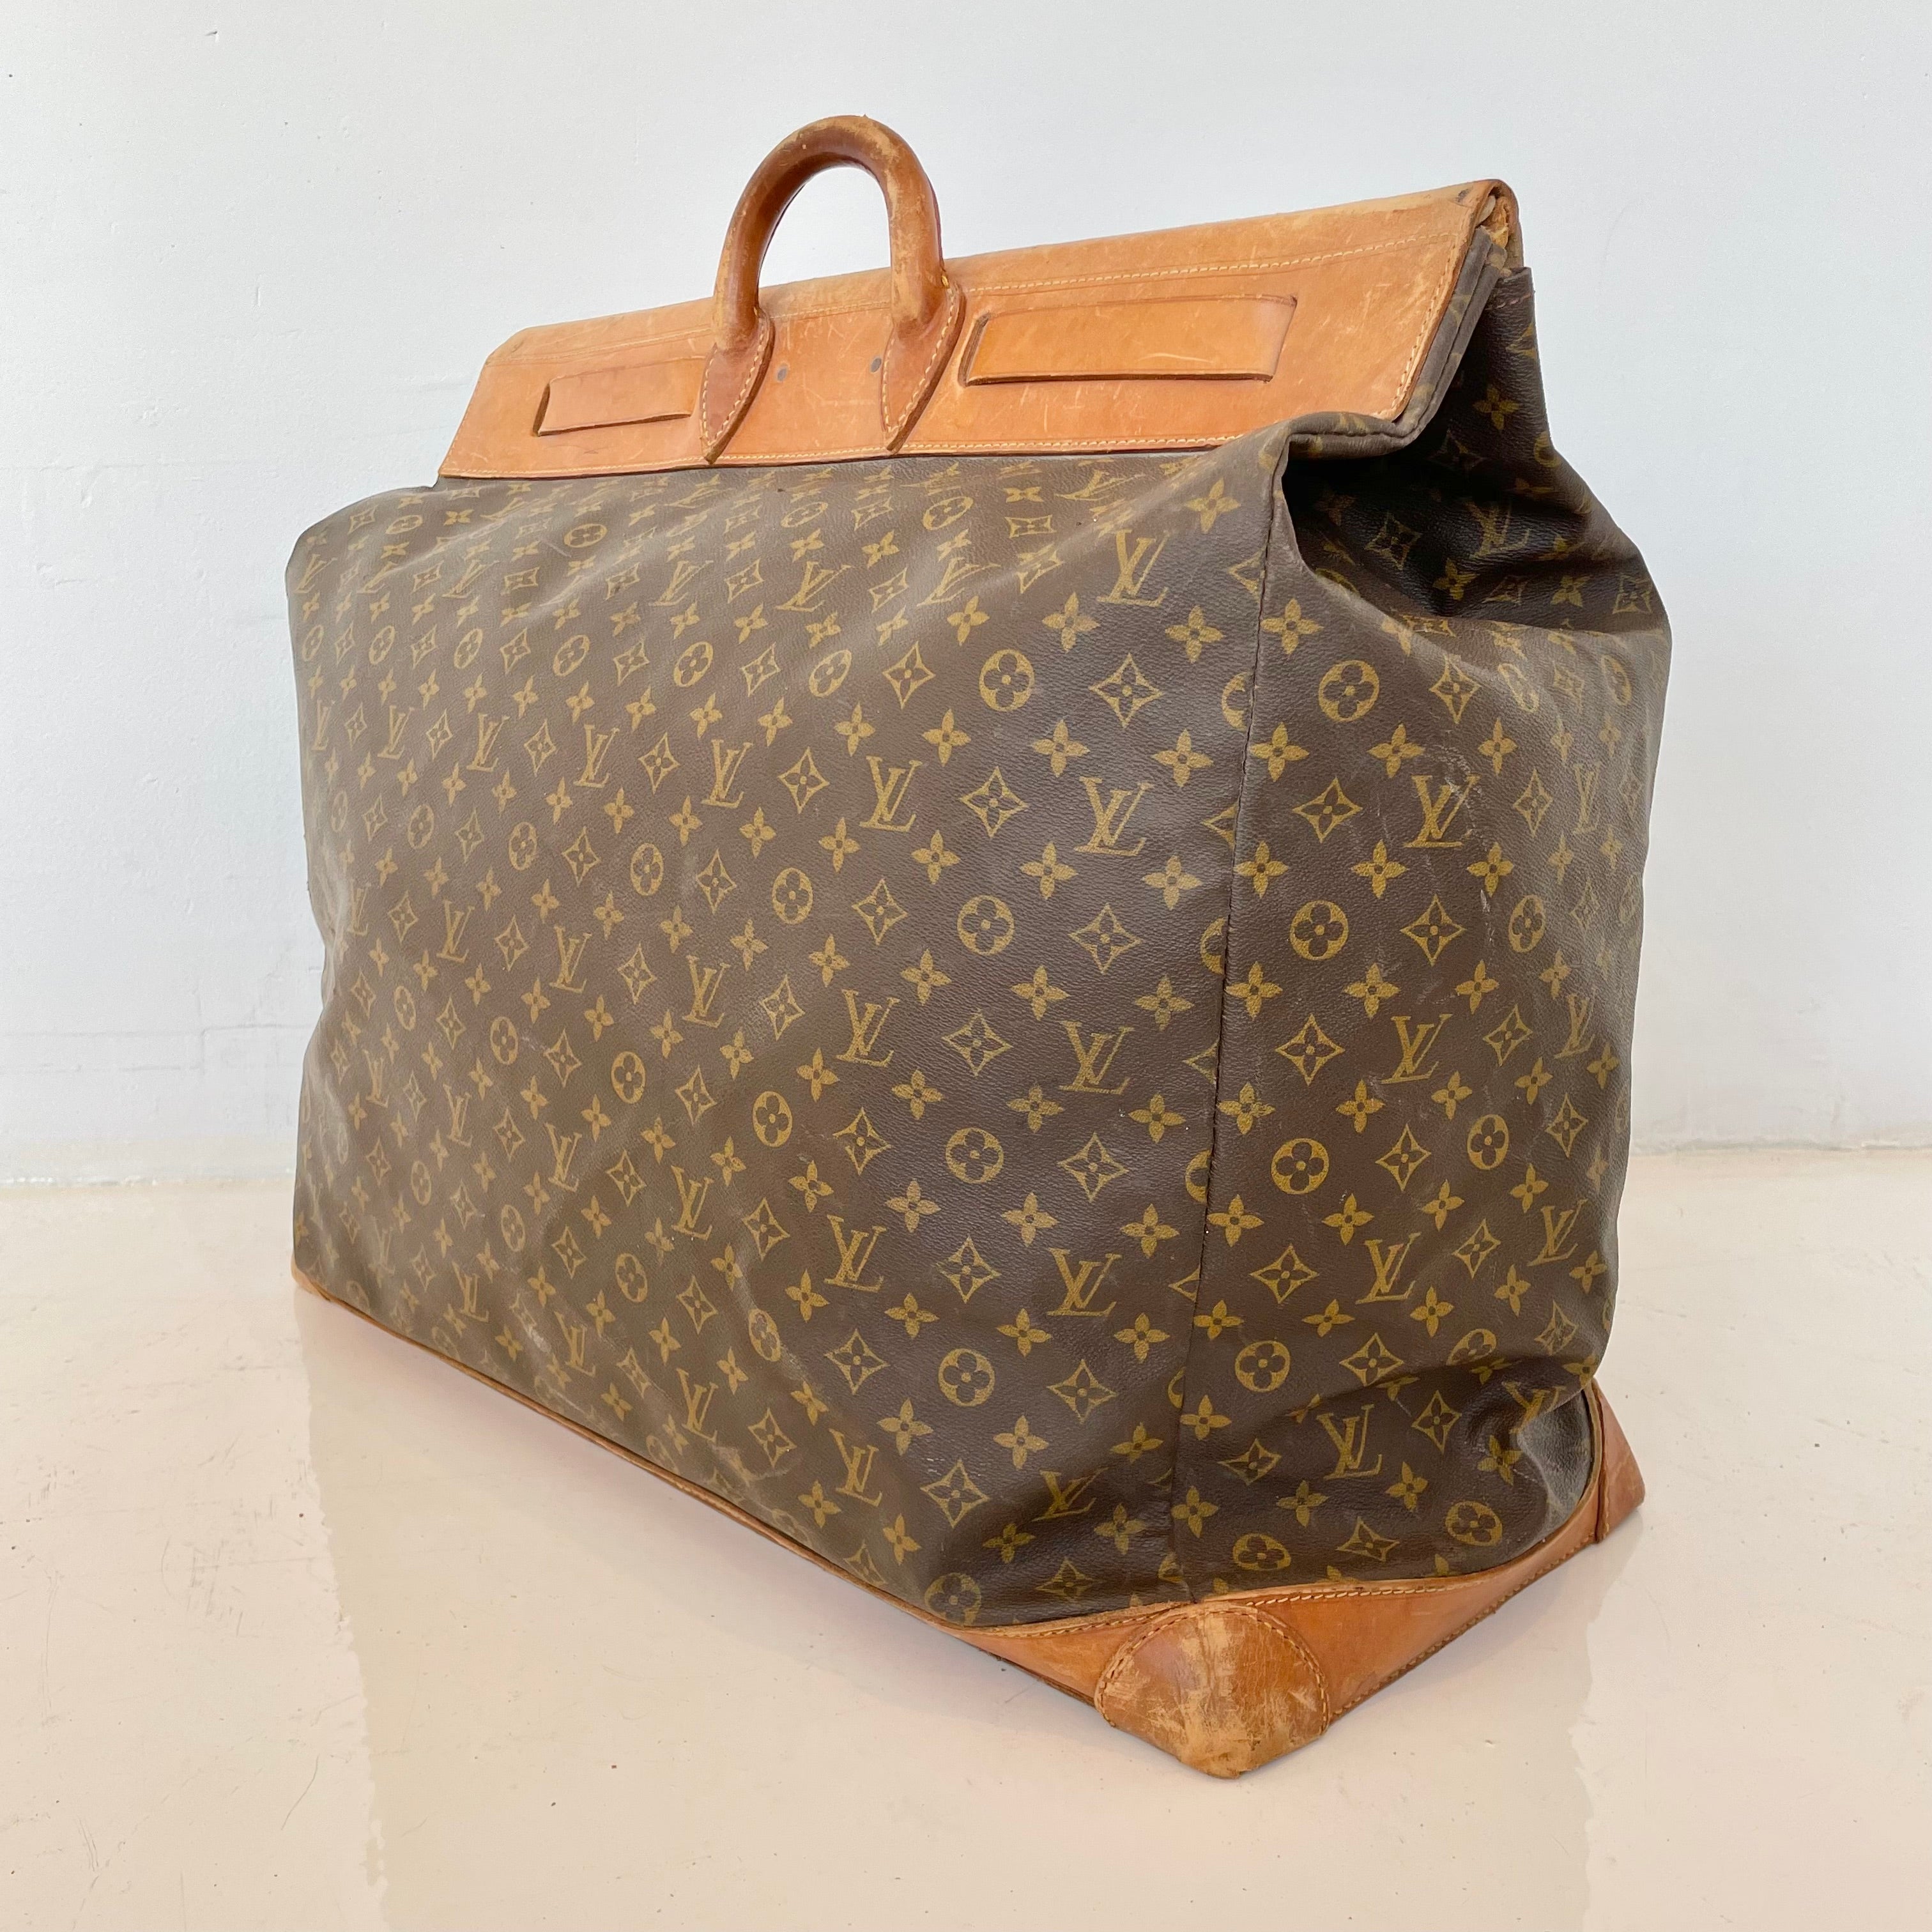 Vintage Louis Vuitton steamer bags. - Kowalski - Recent Added